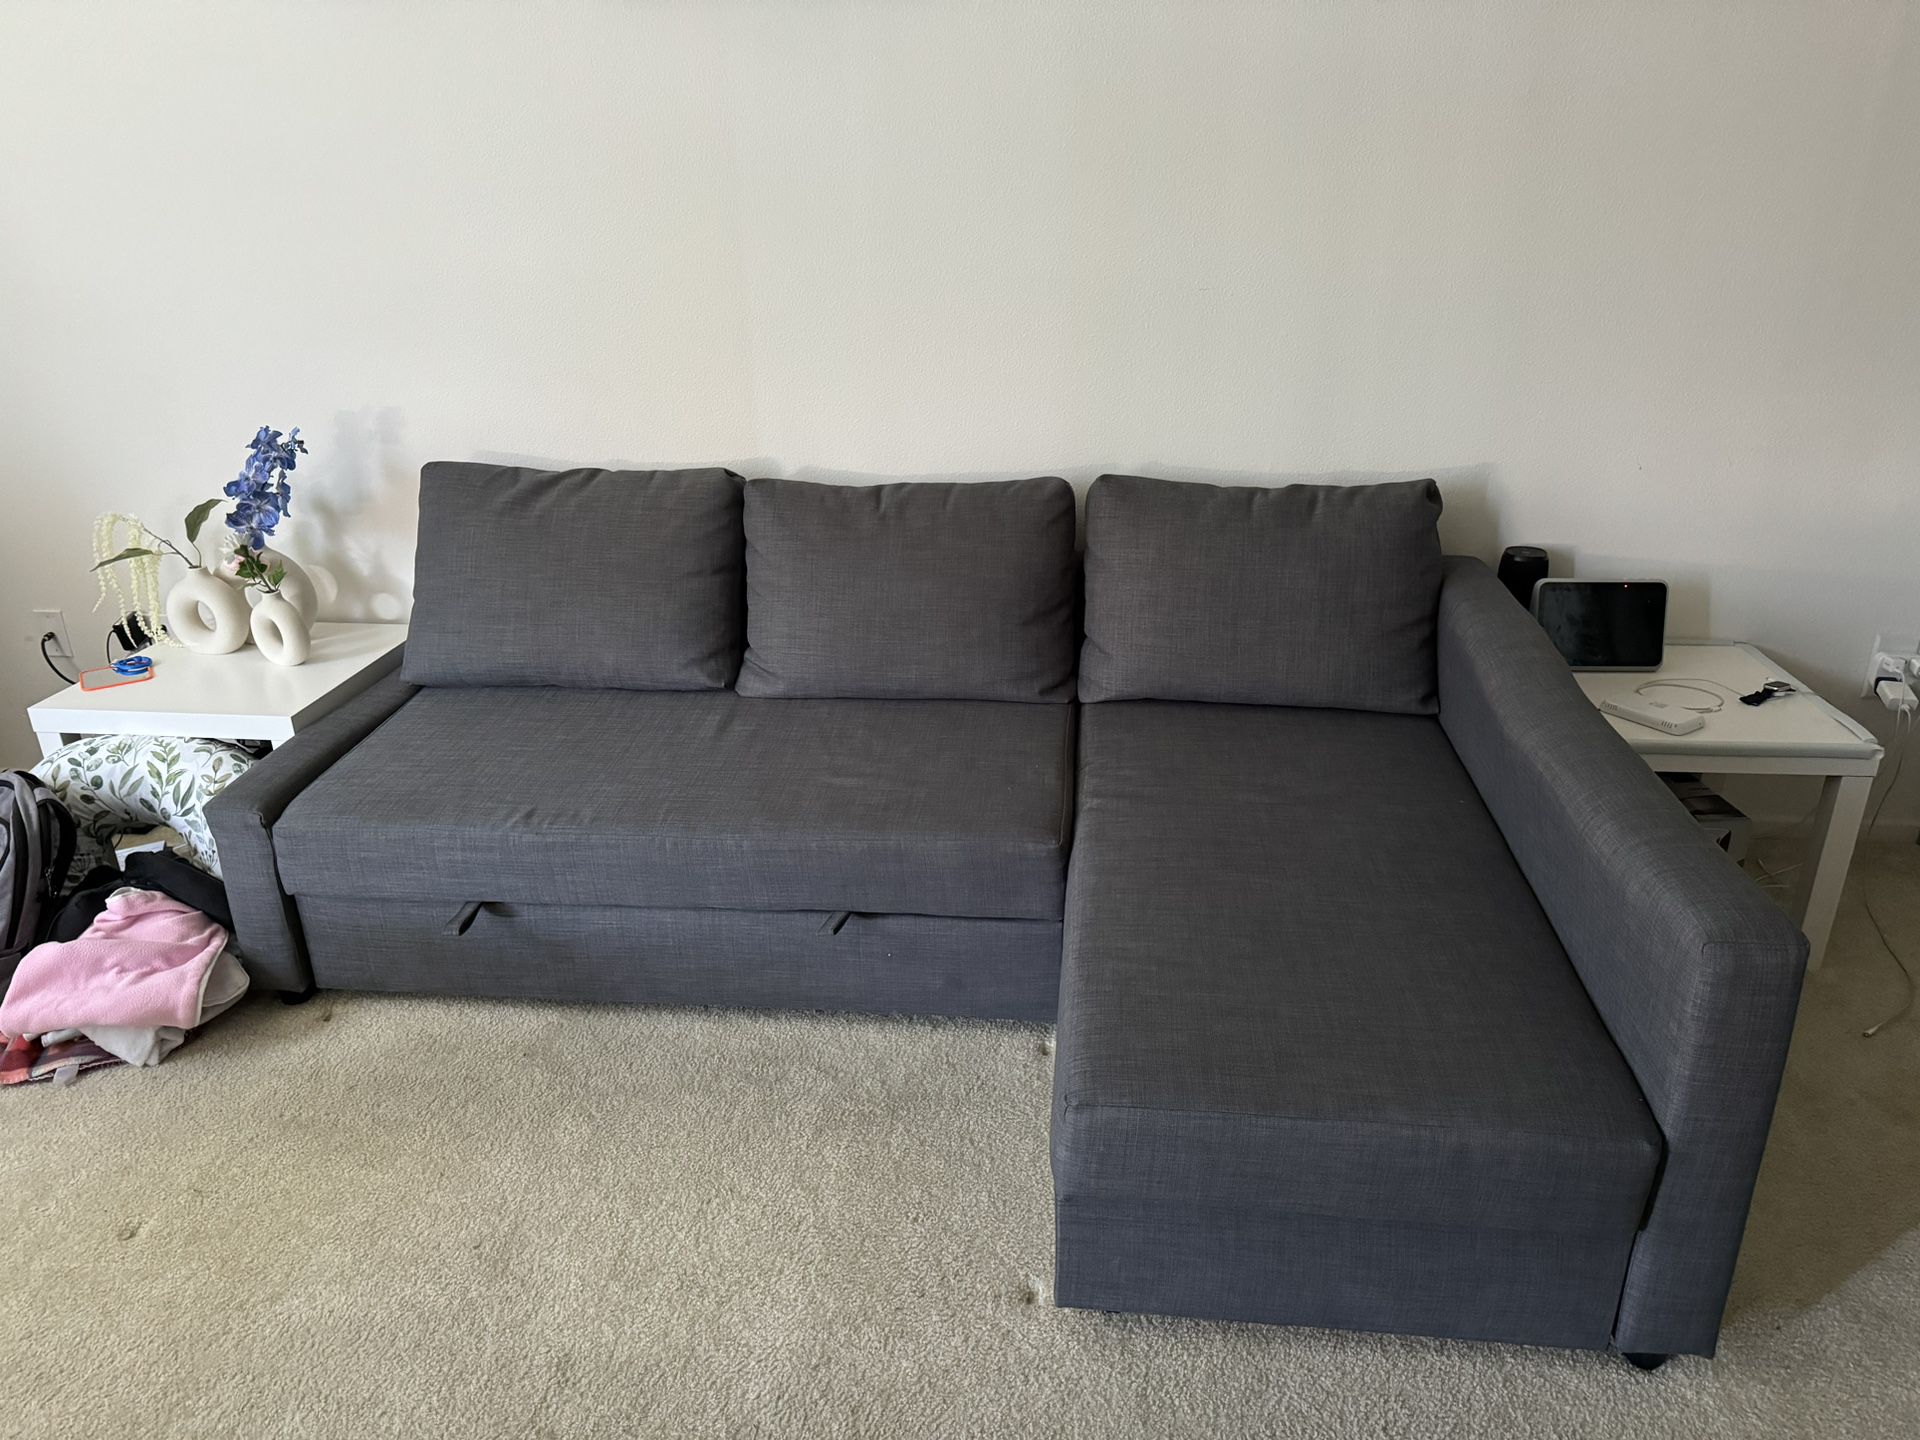 IKEA Sleeper Sectional, 3 Seat With Storage 